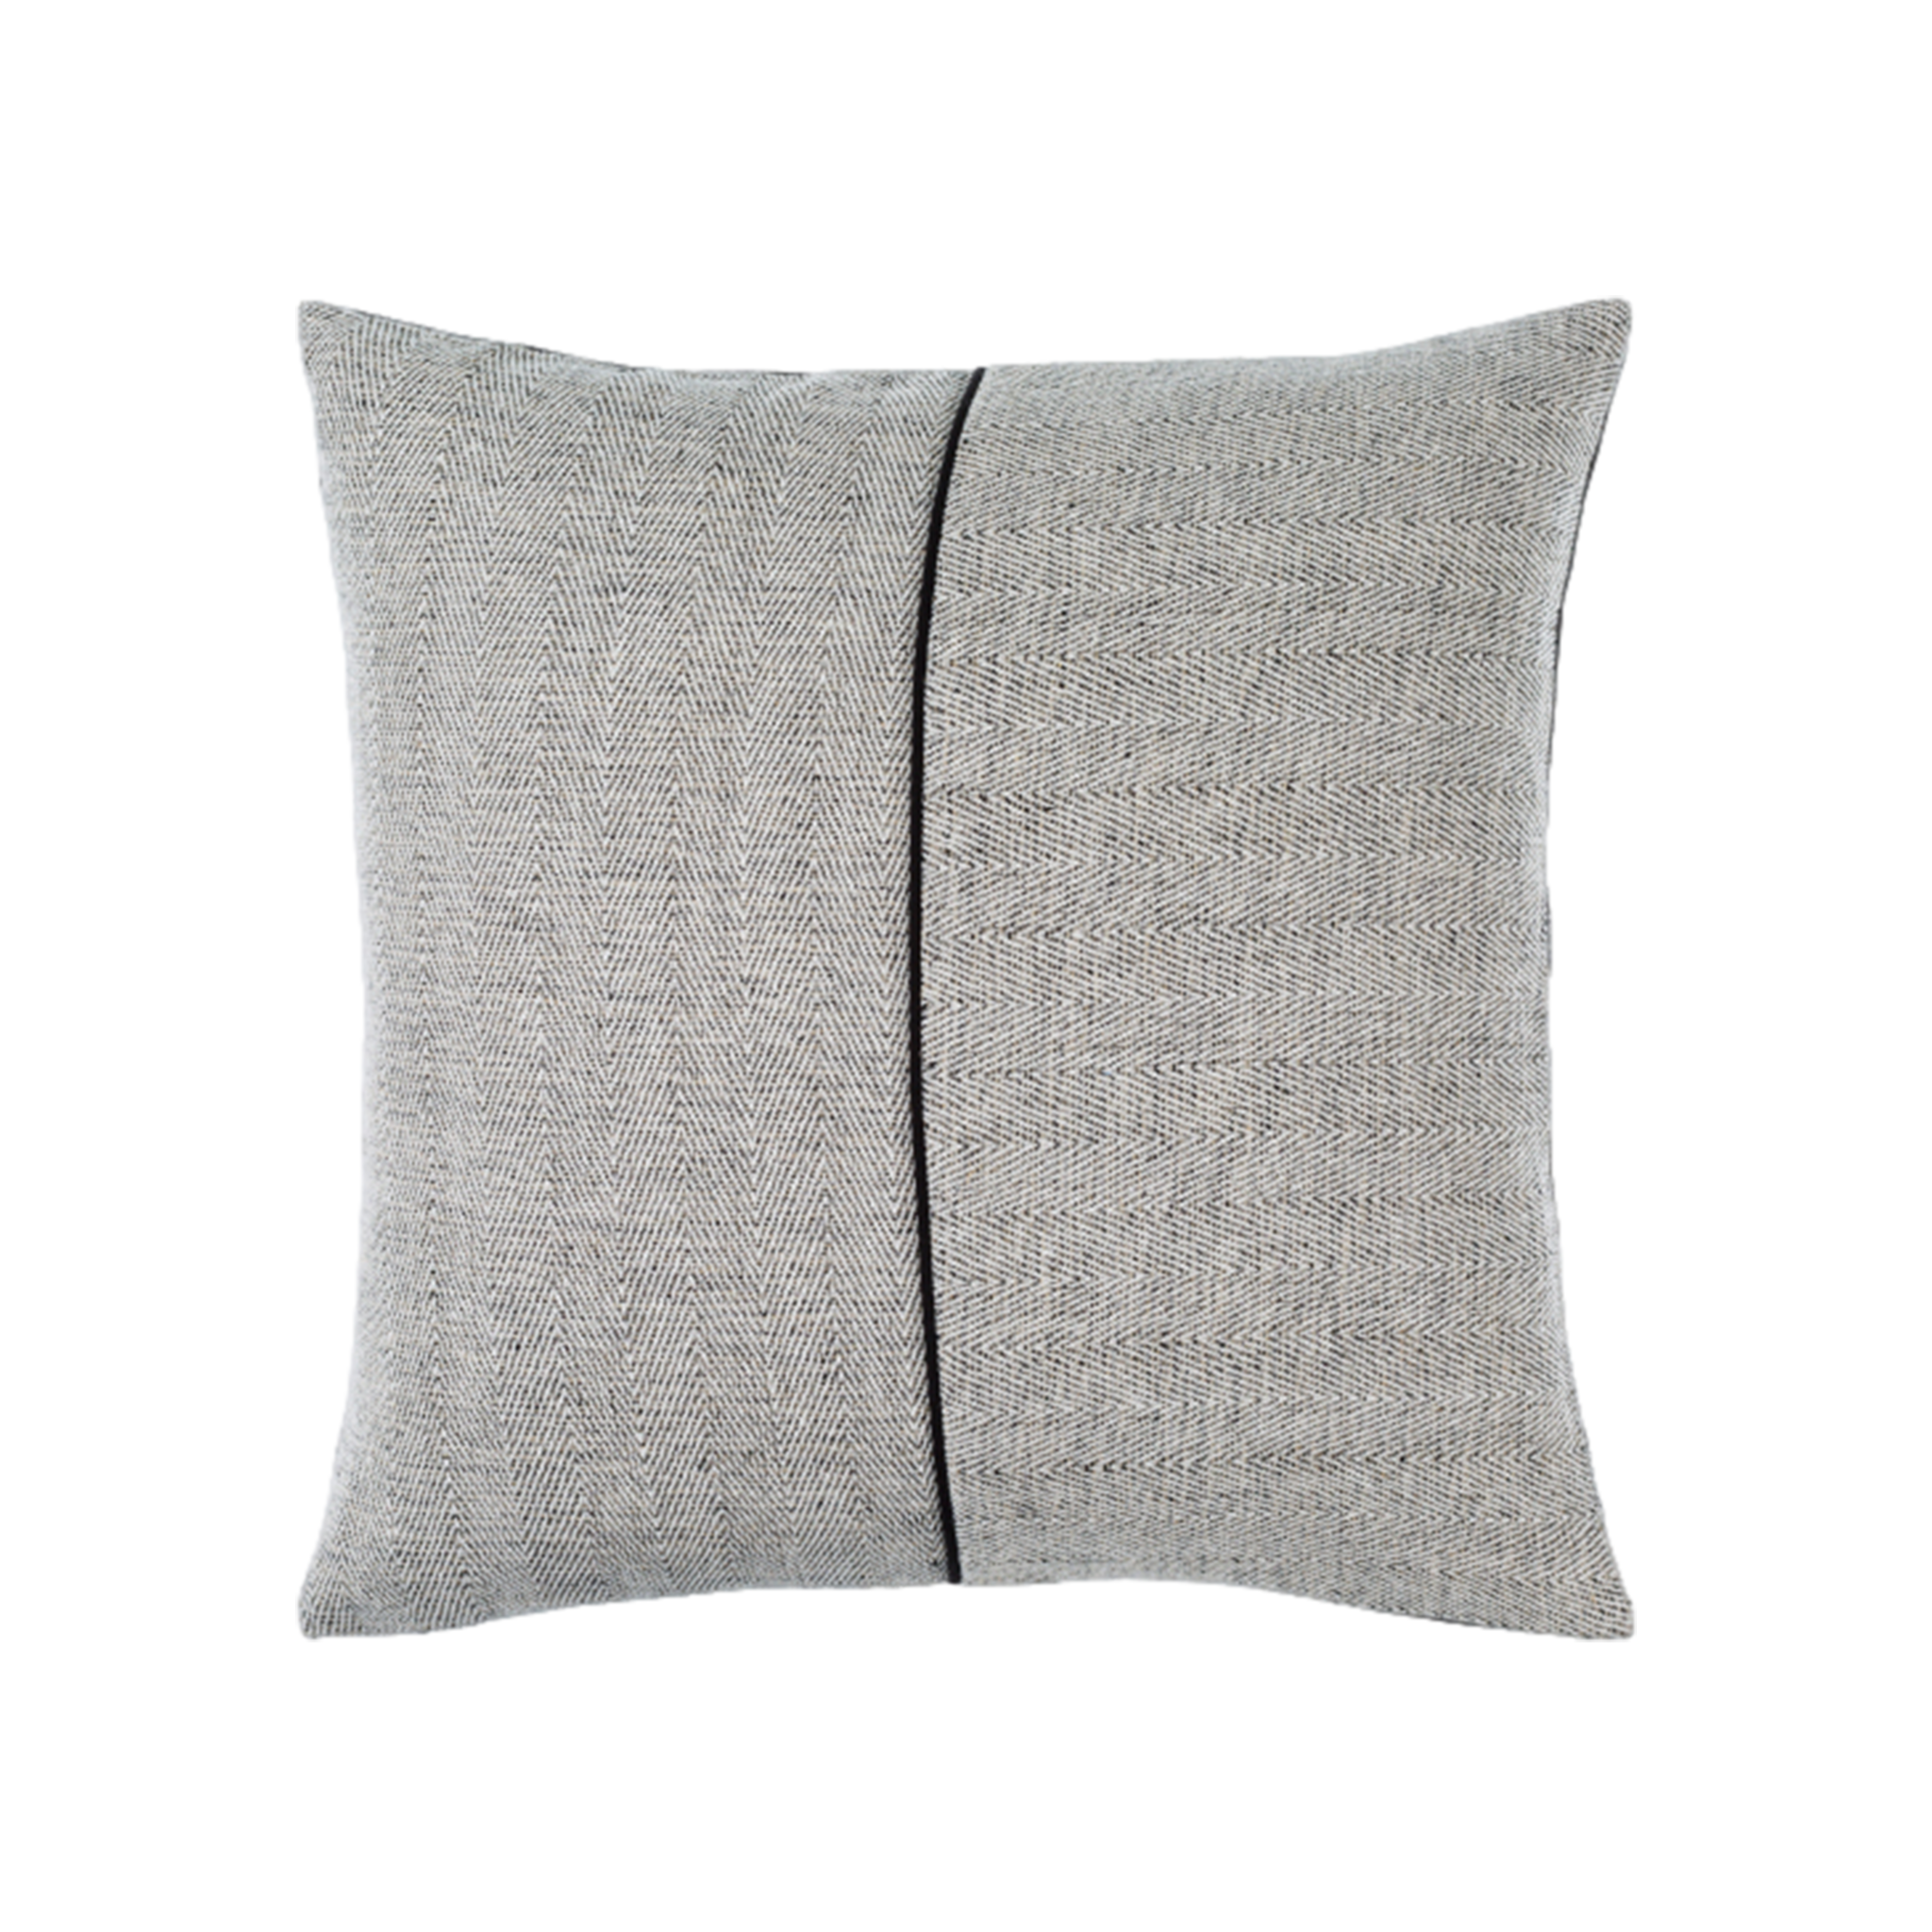 Stitched Linen Pillow